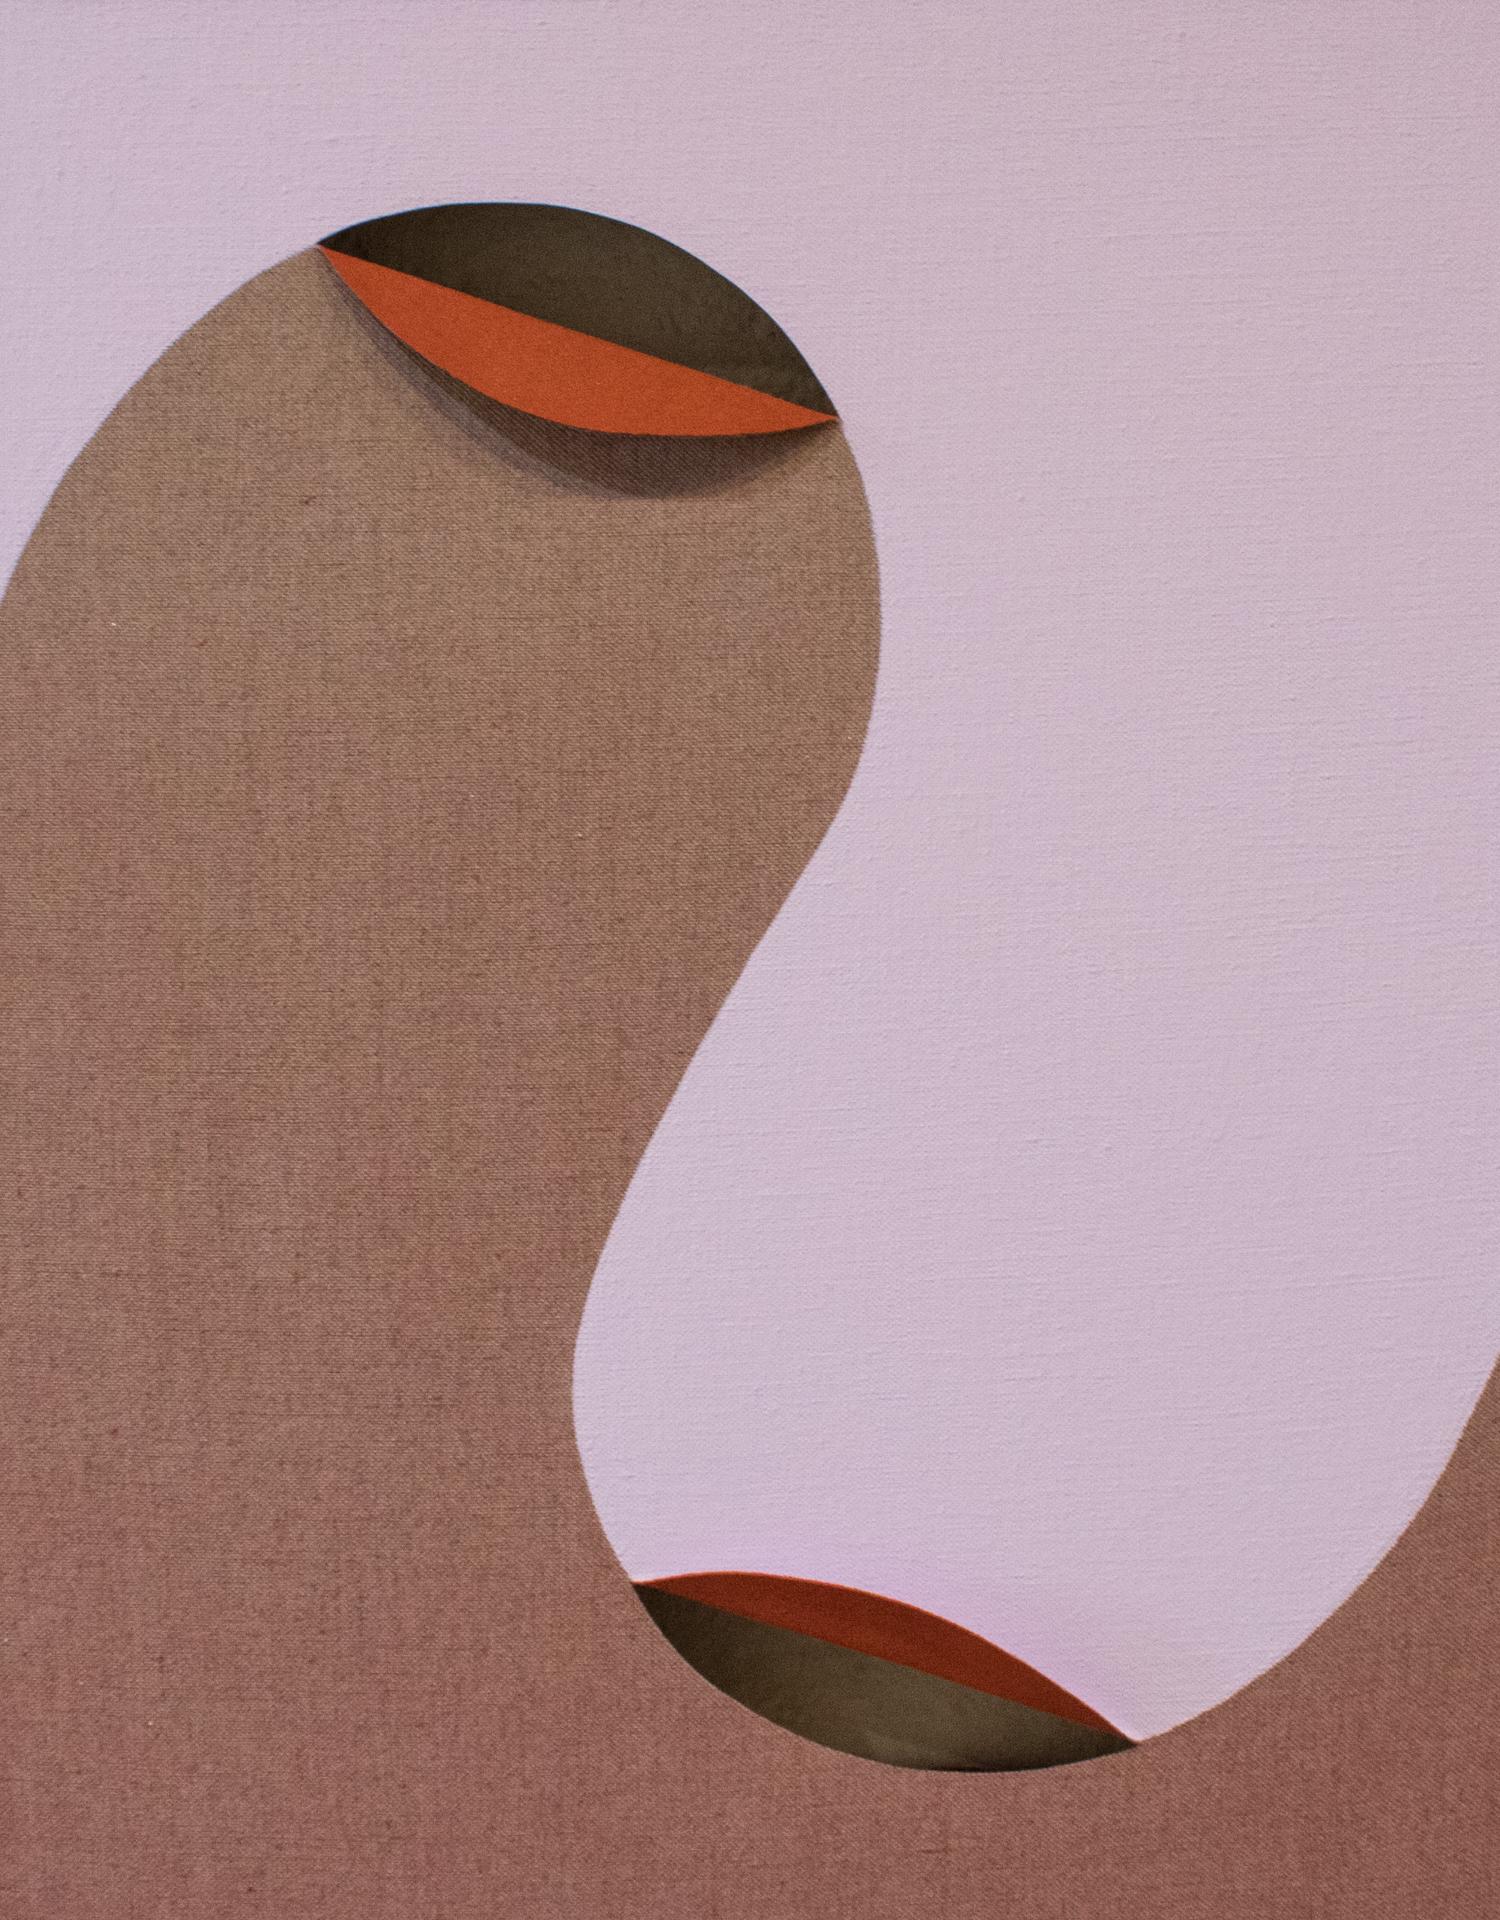 Linda King Ferguson Abstract Sculpture - DYAD 22 - Contemporary - Oil & Acrylic on Linen, Pink, Tan, Feminist 